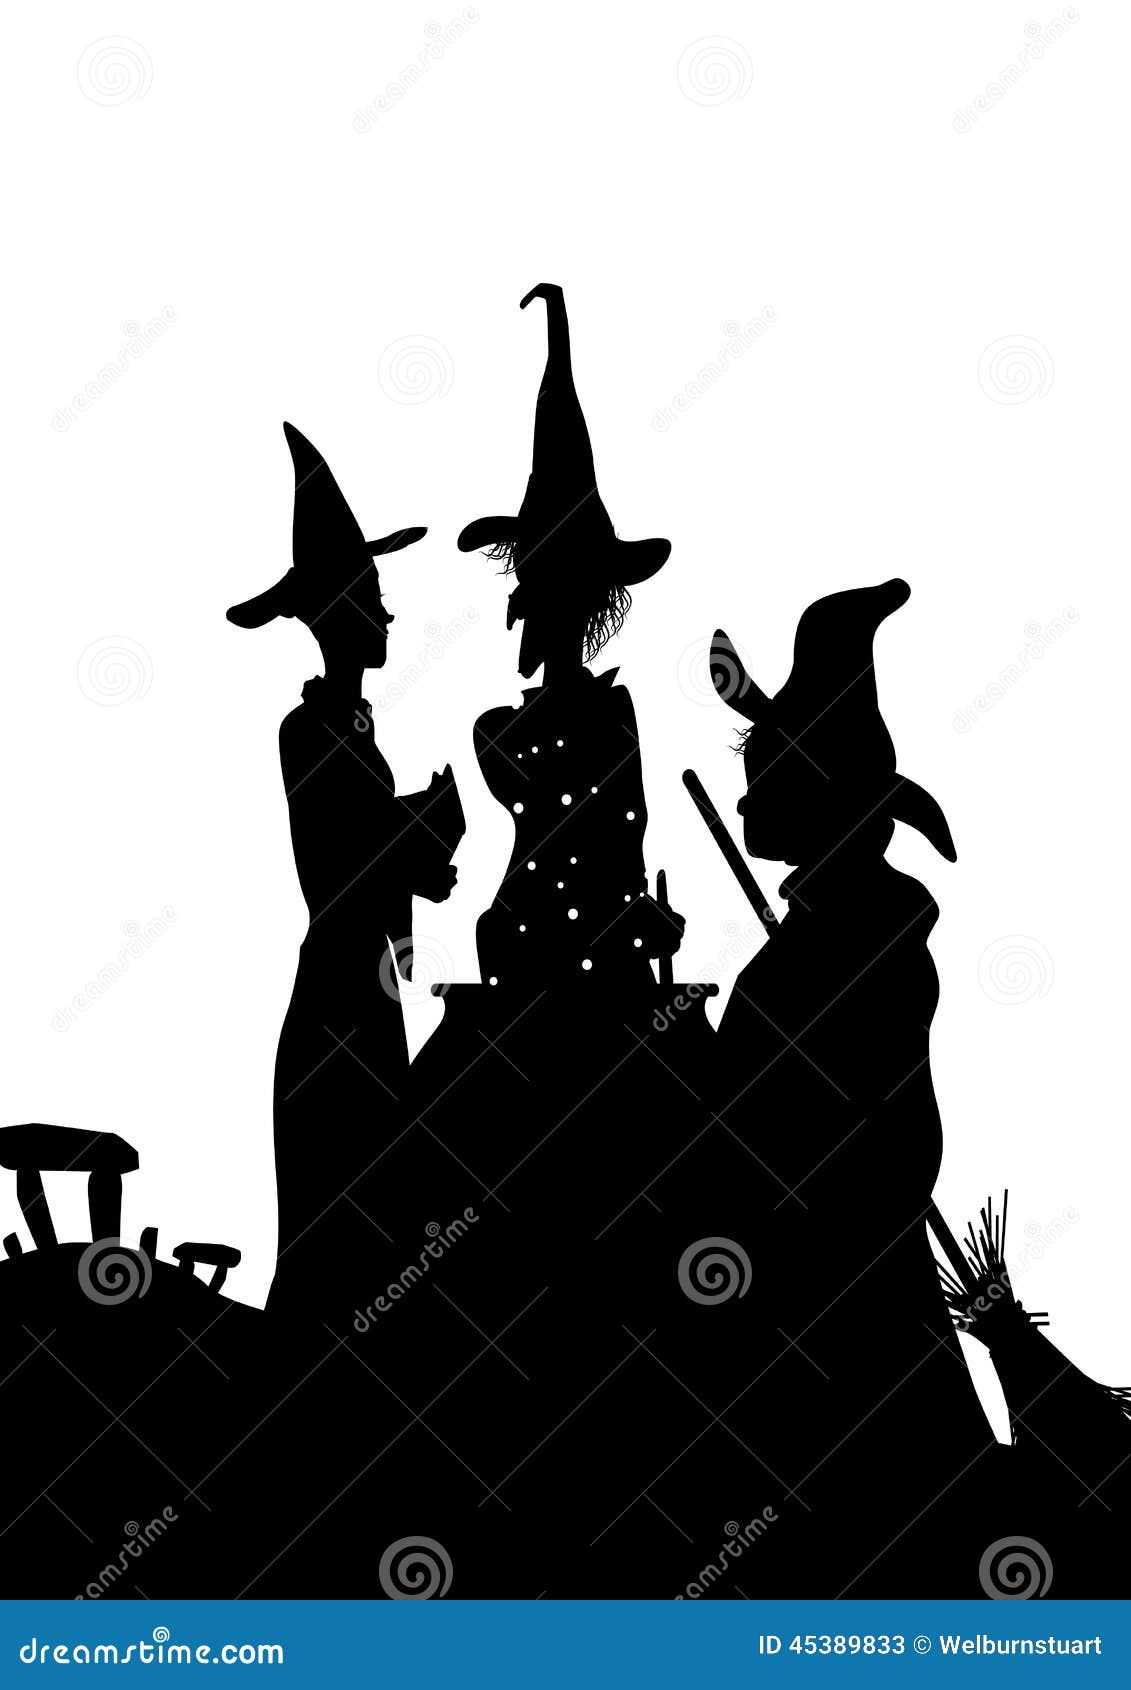 3 Witches Cauldron Illustration 45389833 - Megapixl